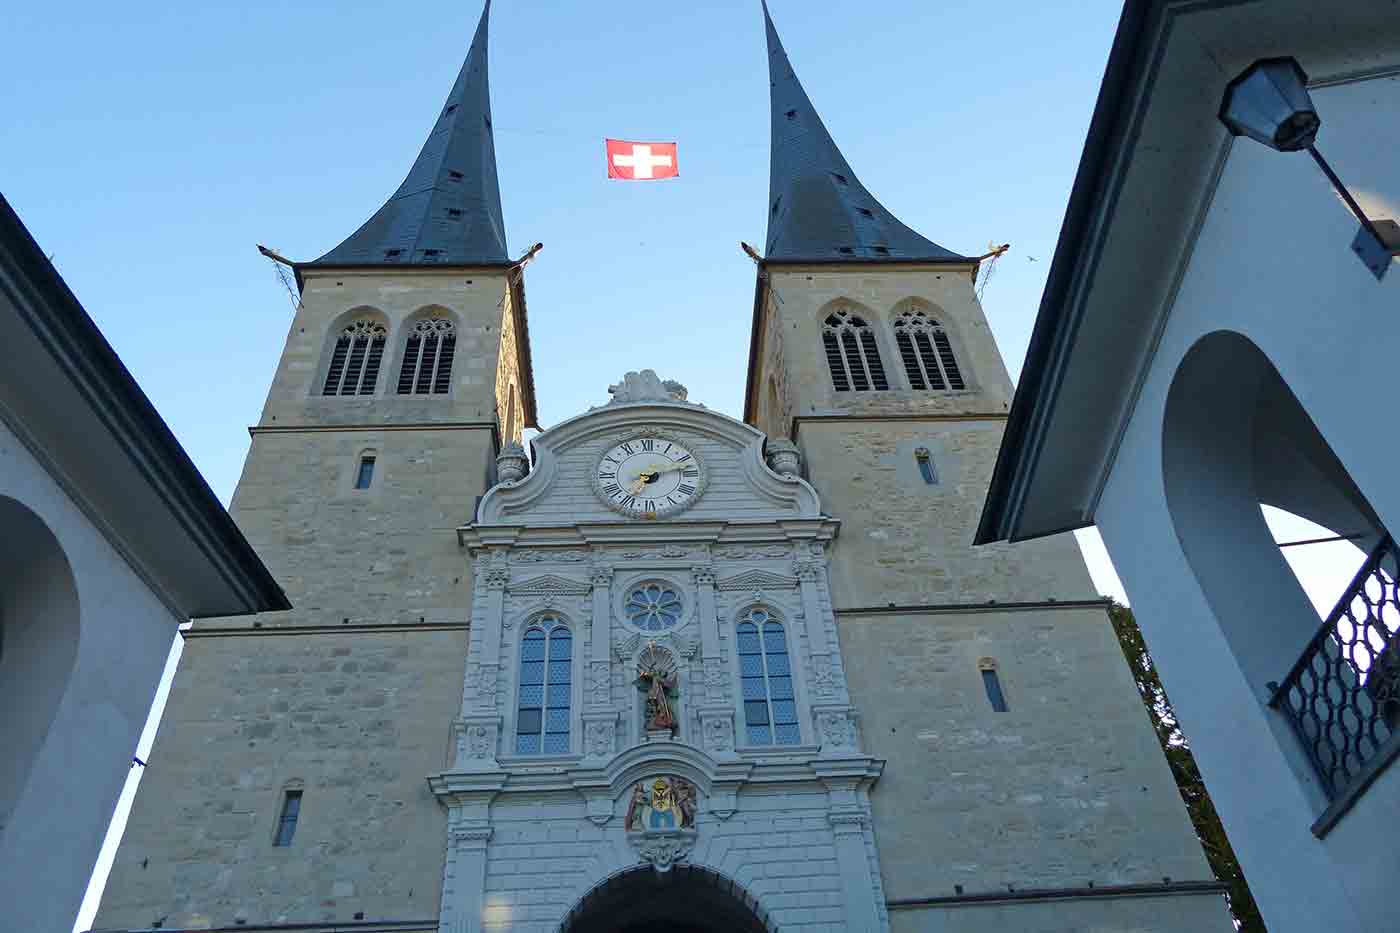 Church of St. Leodegar